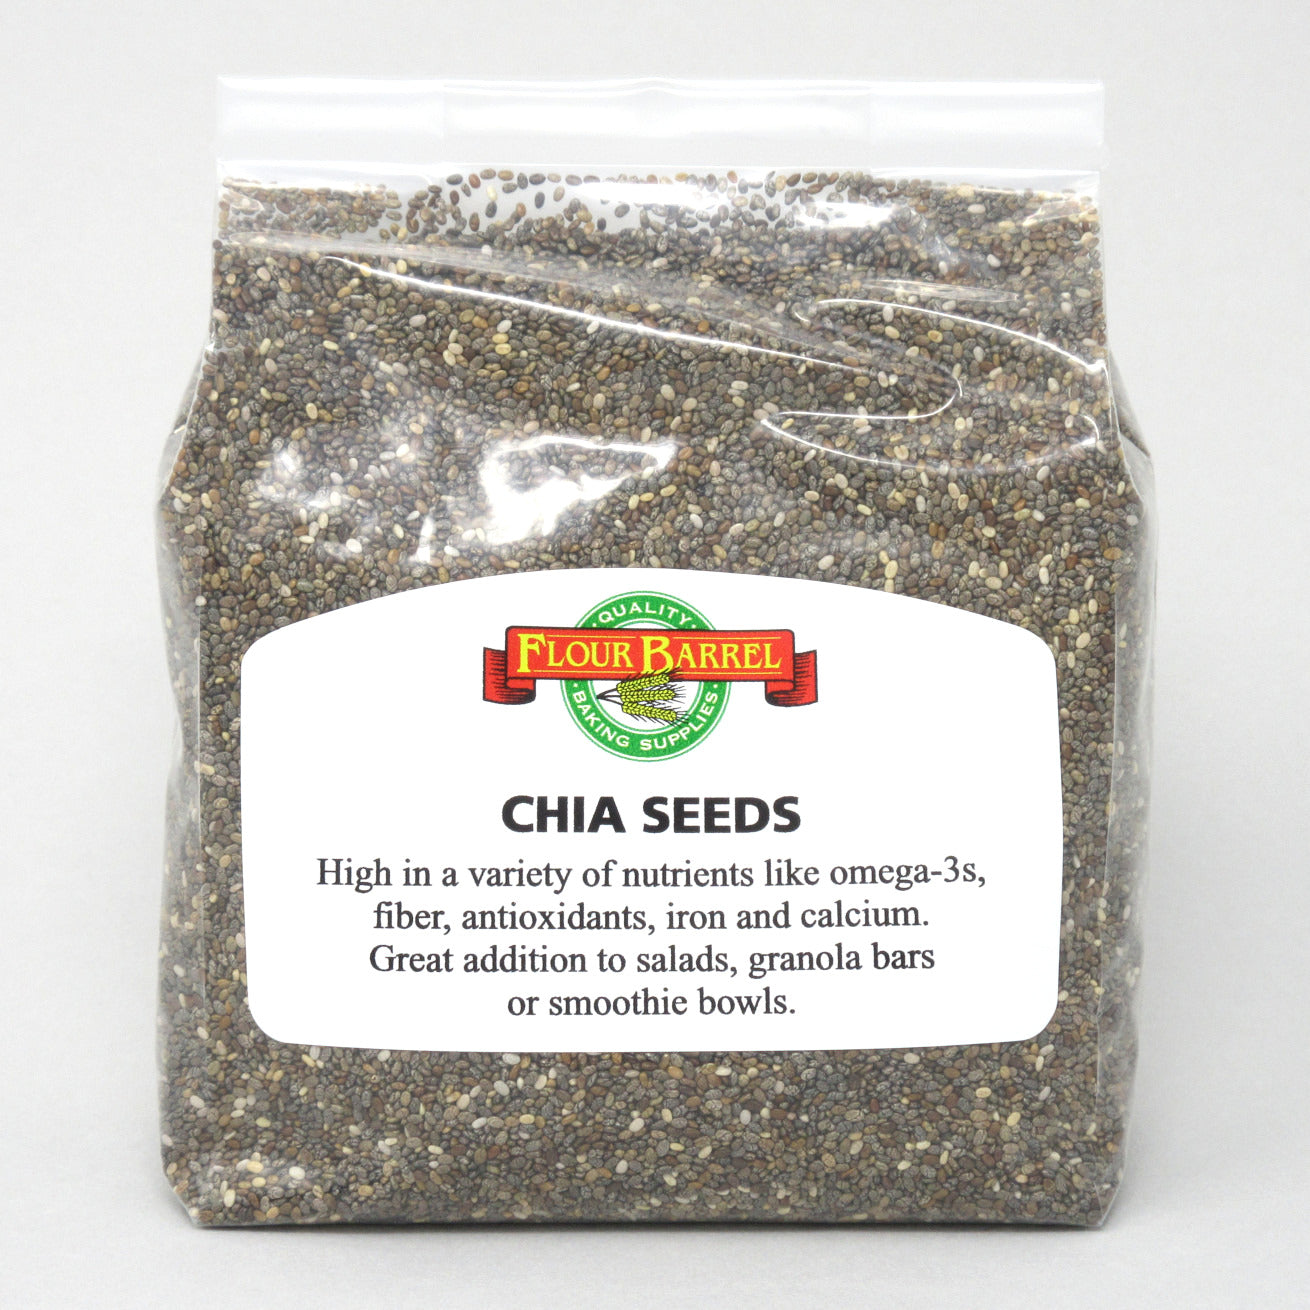 Flour Barrel product image - Chia Seeds